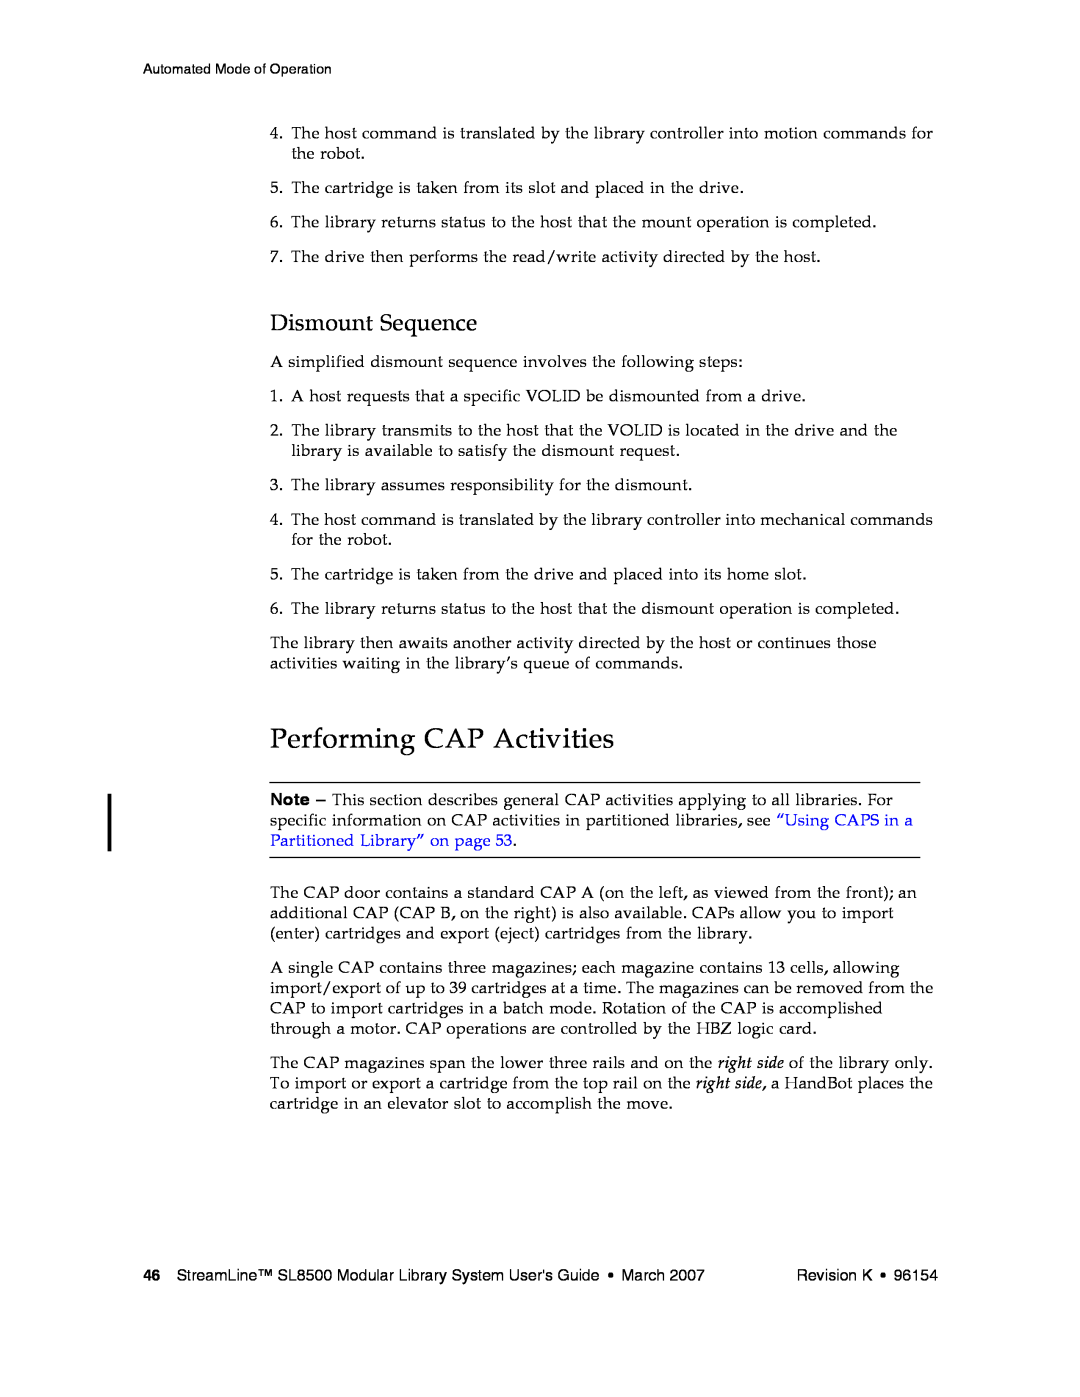 Sun Microsystems SL8500 manual Performing CAP Activities, Dismount Sequence 